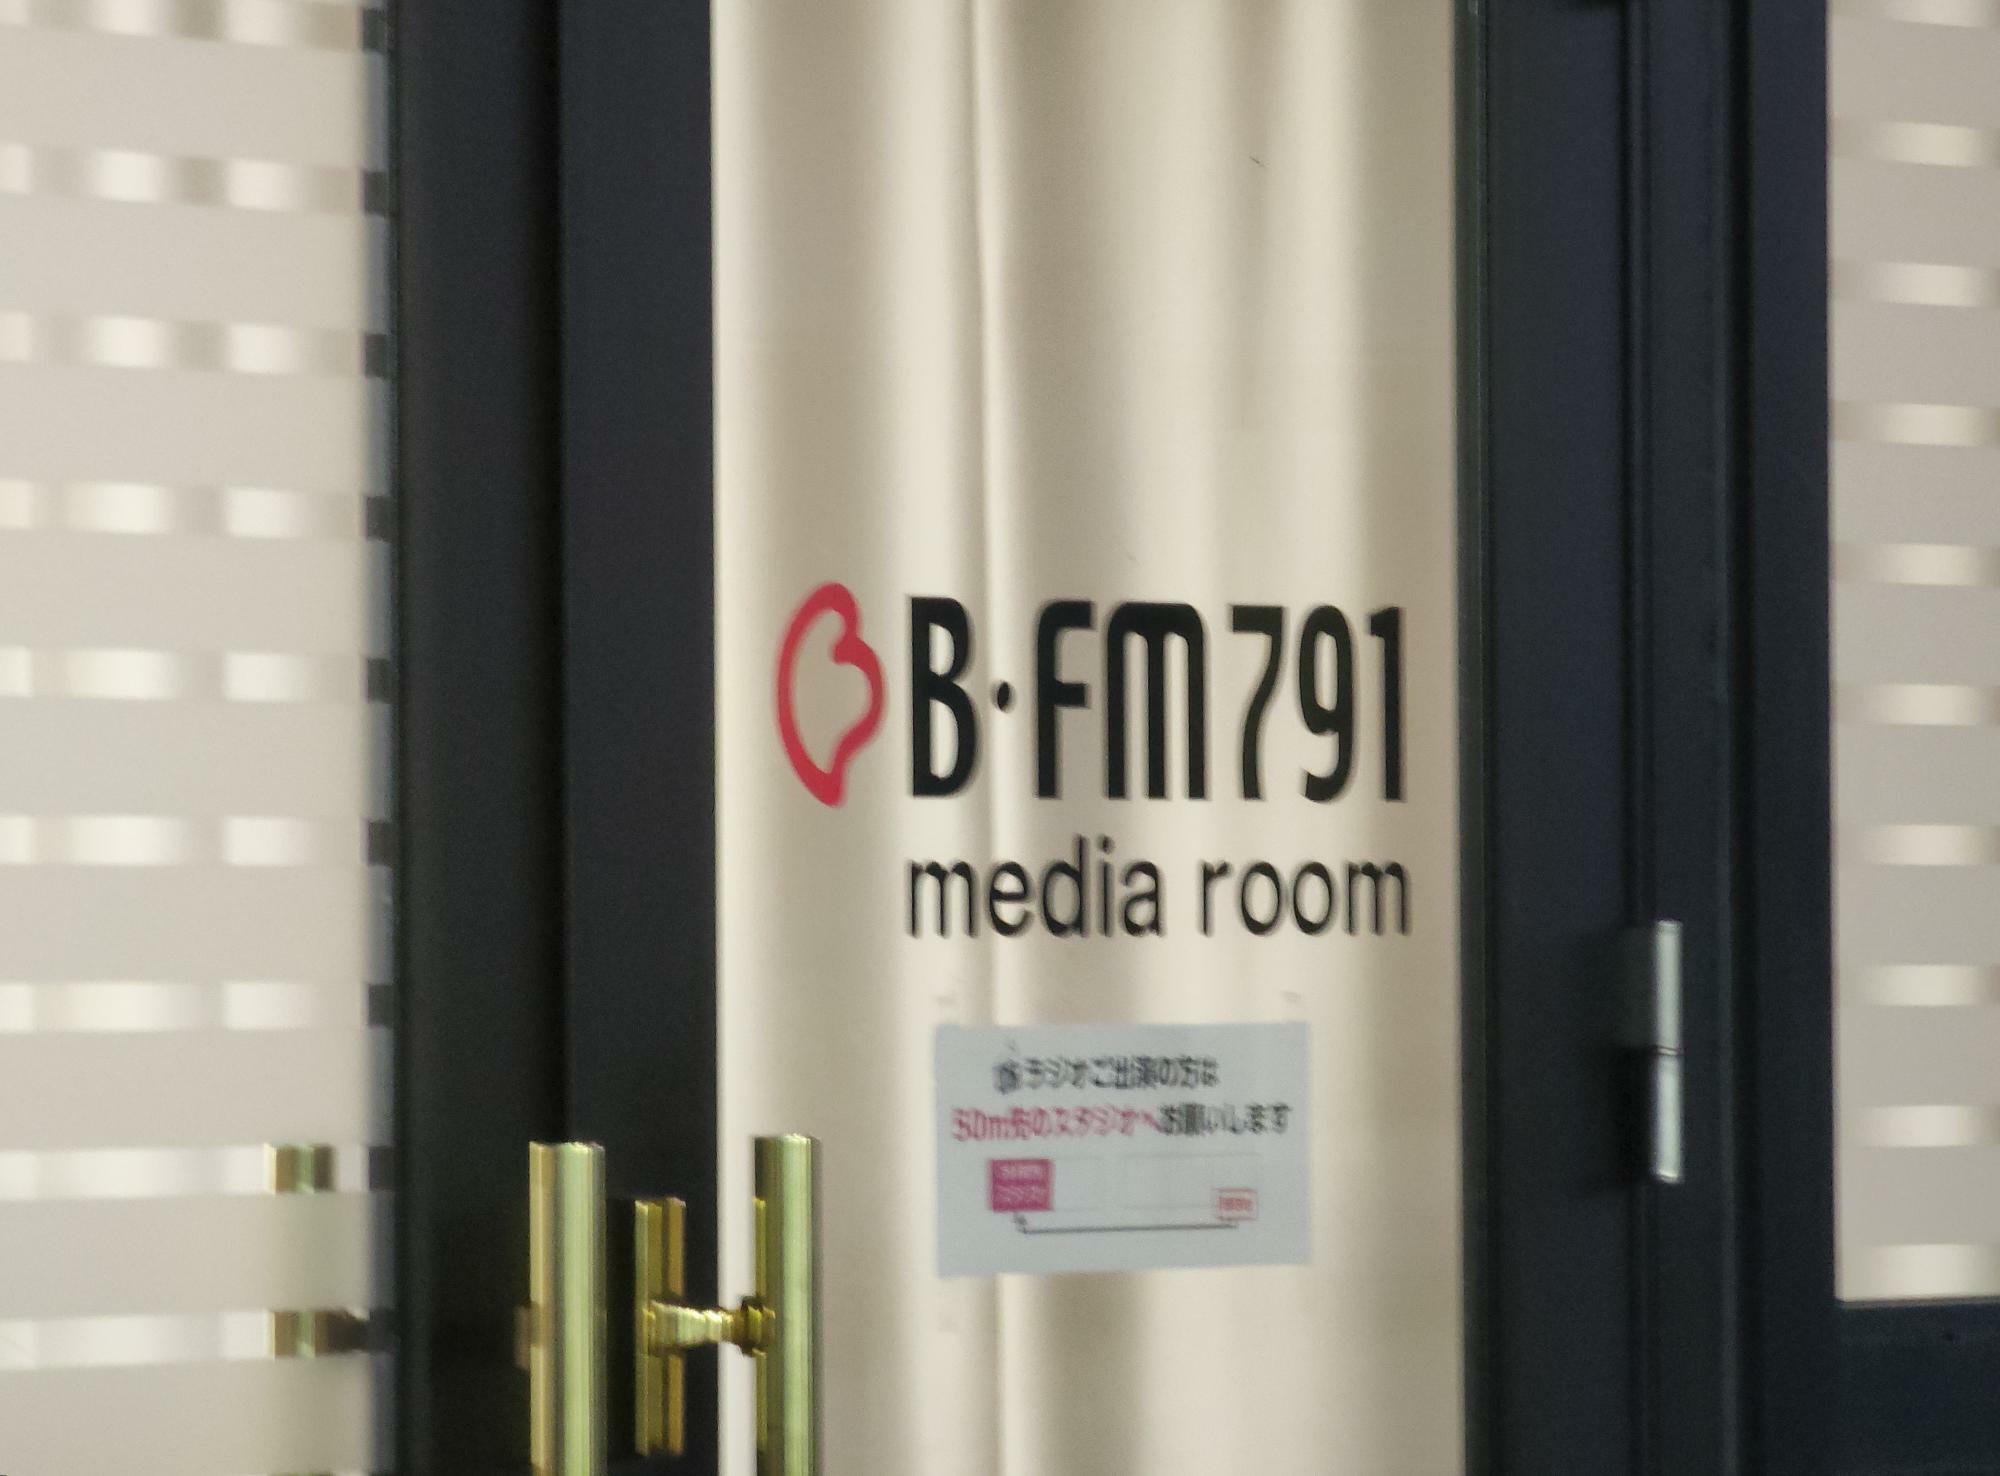 「B・FM791 media room」外観。